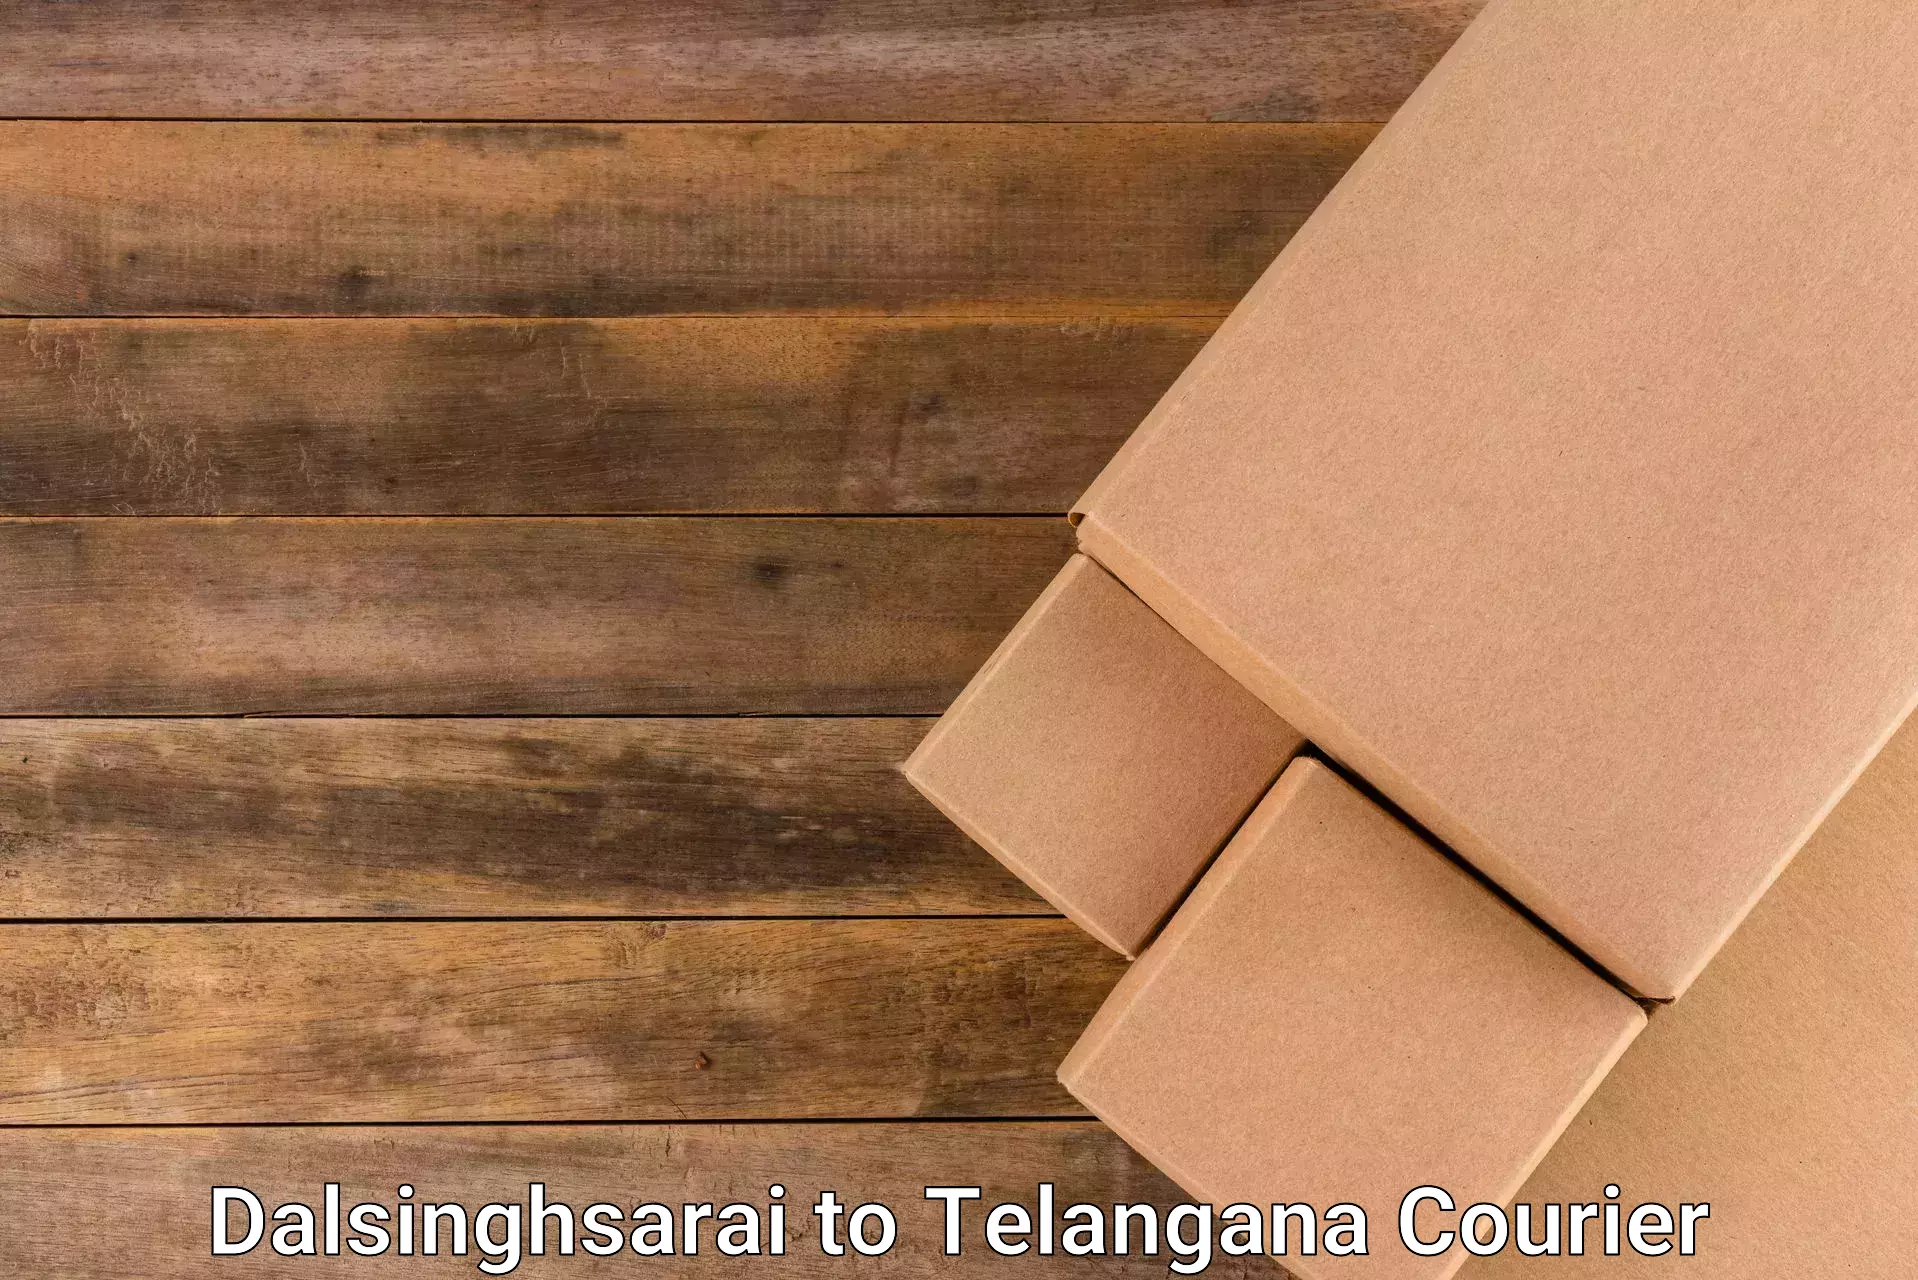 Efficient parcel service in Dalsinghsarai to Narsapur Medak